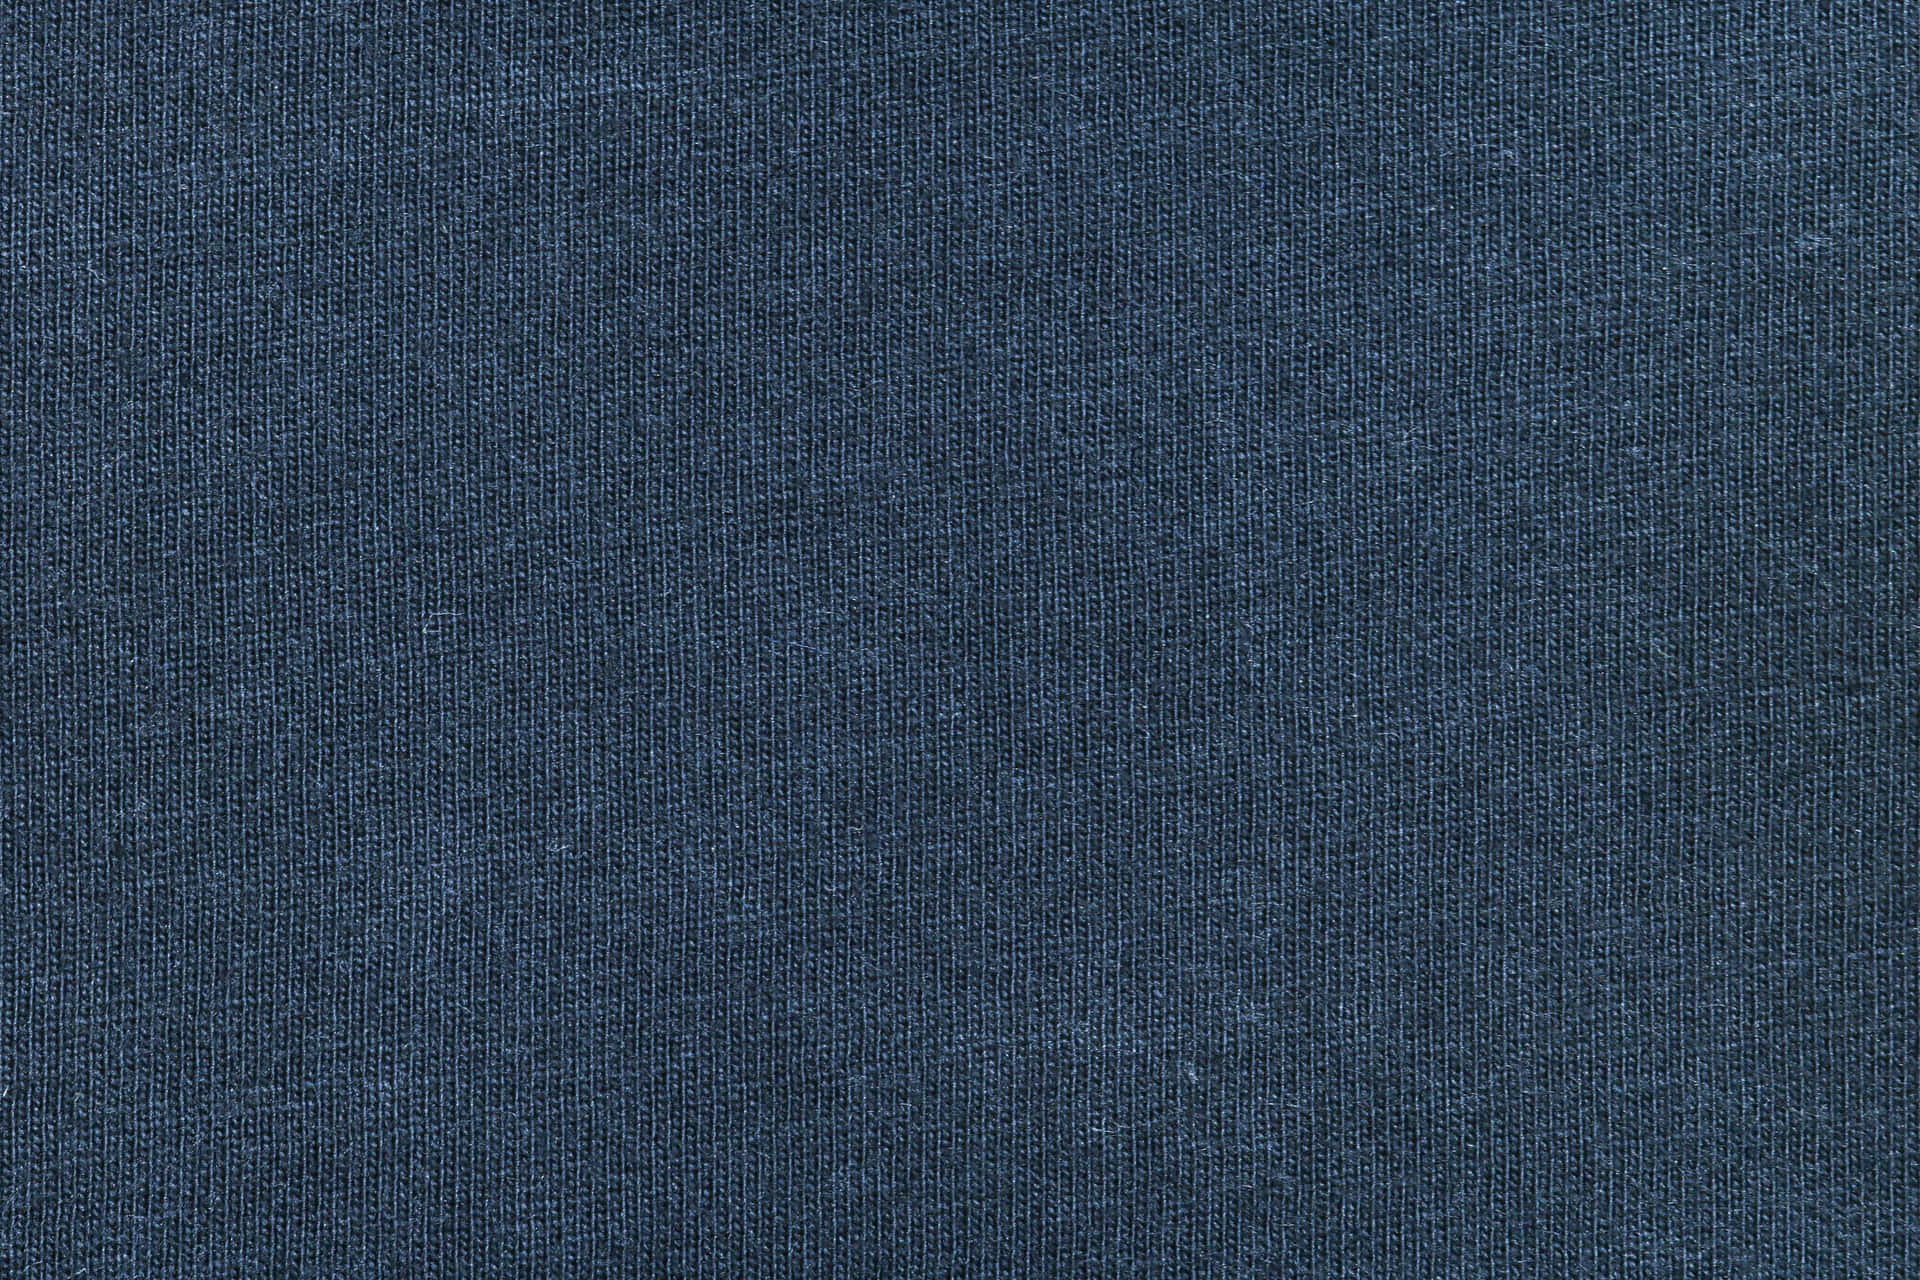 Fabric Texture Pictures Dark Blue